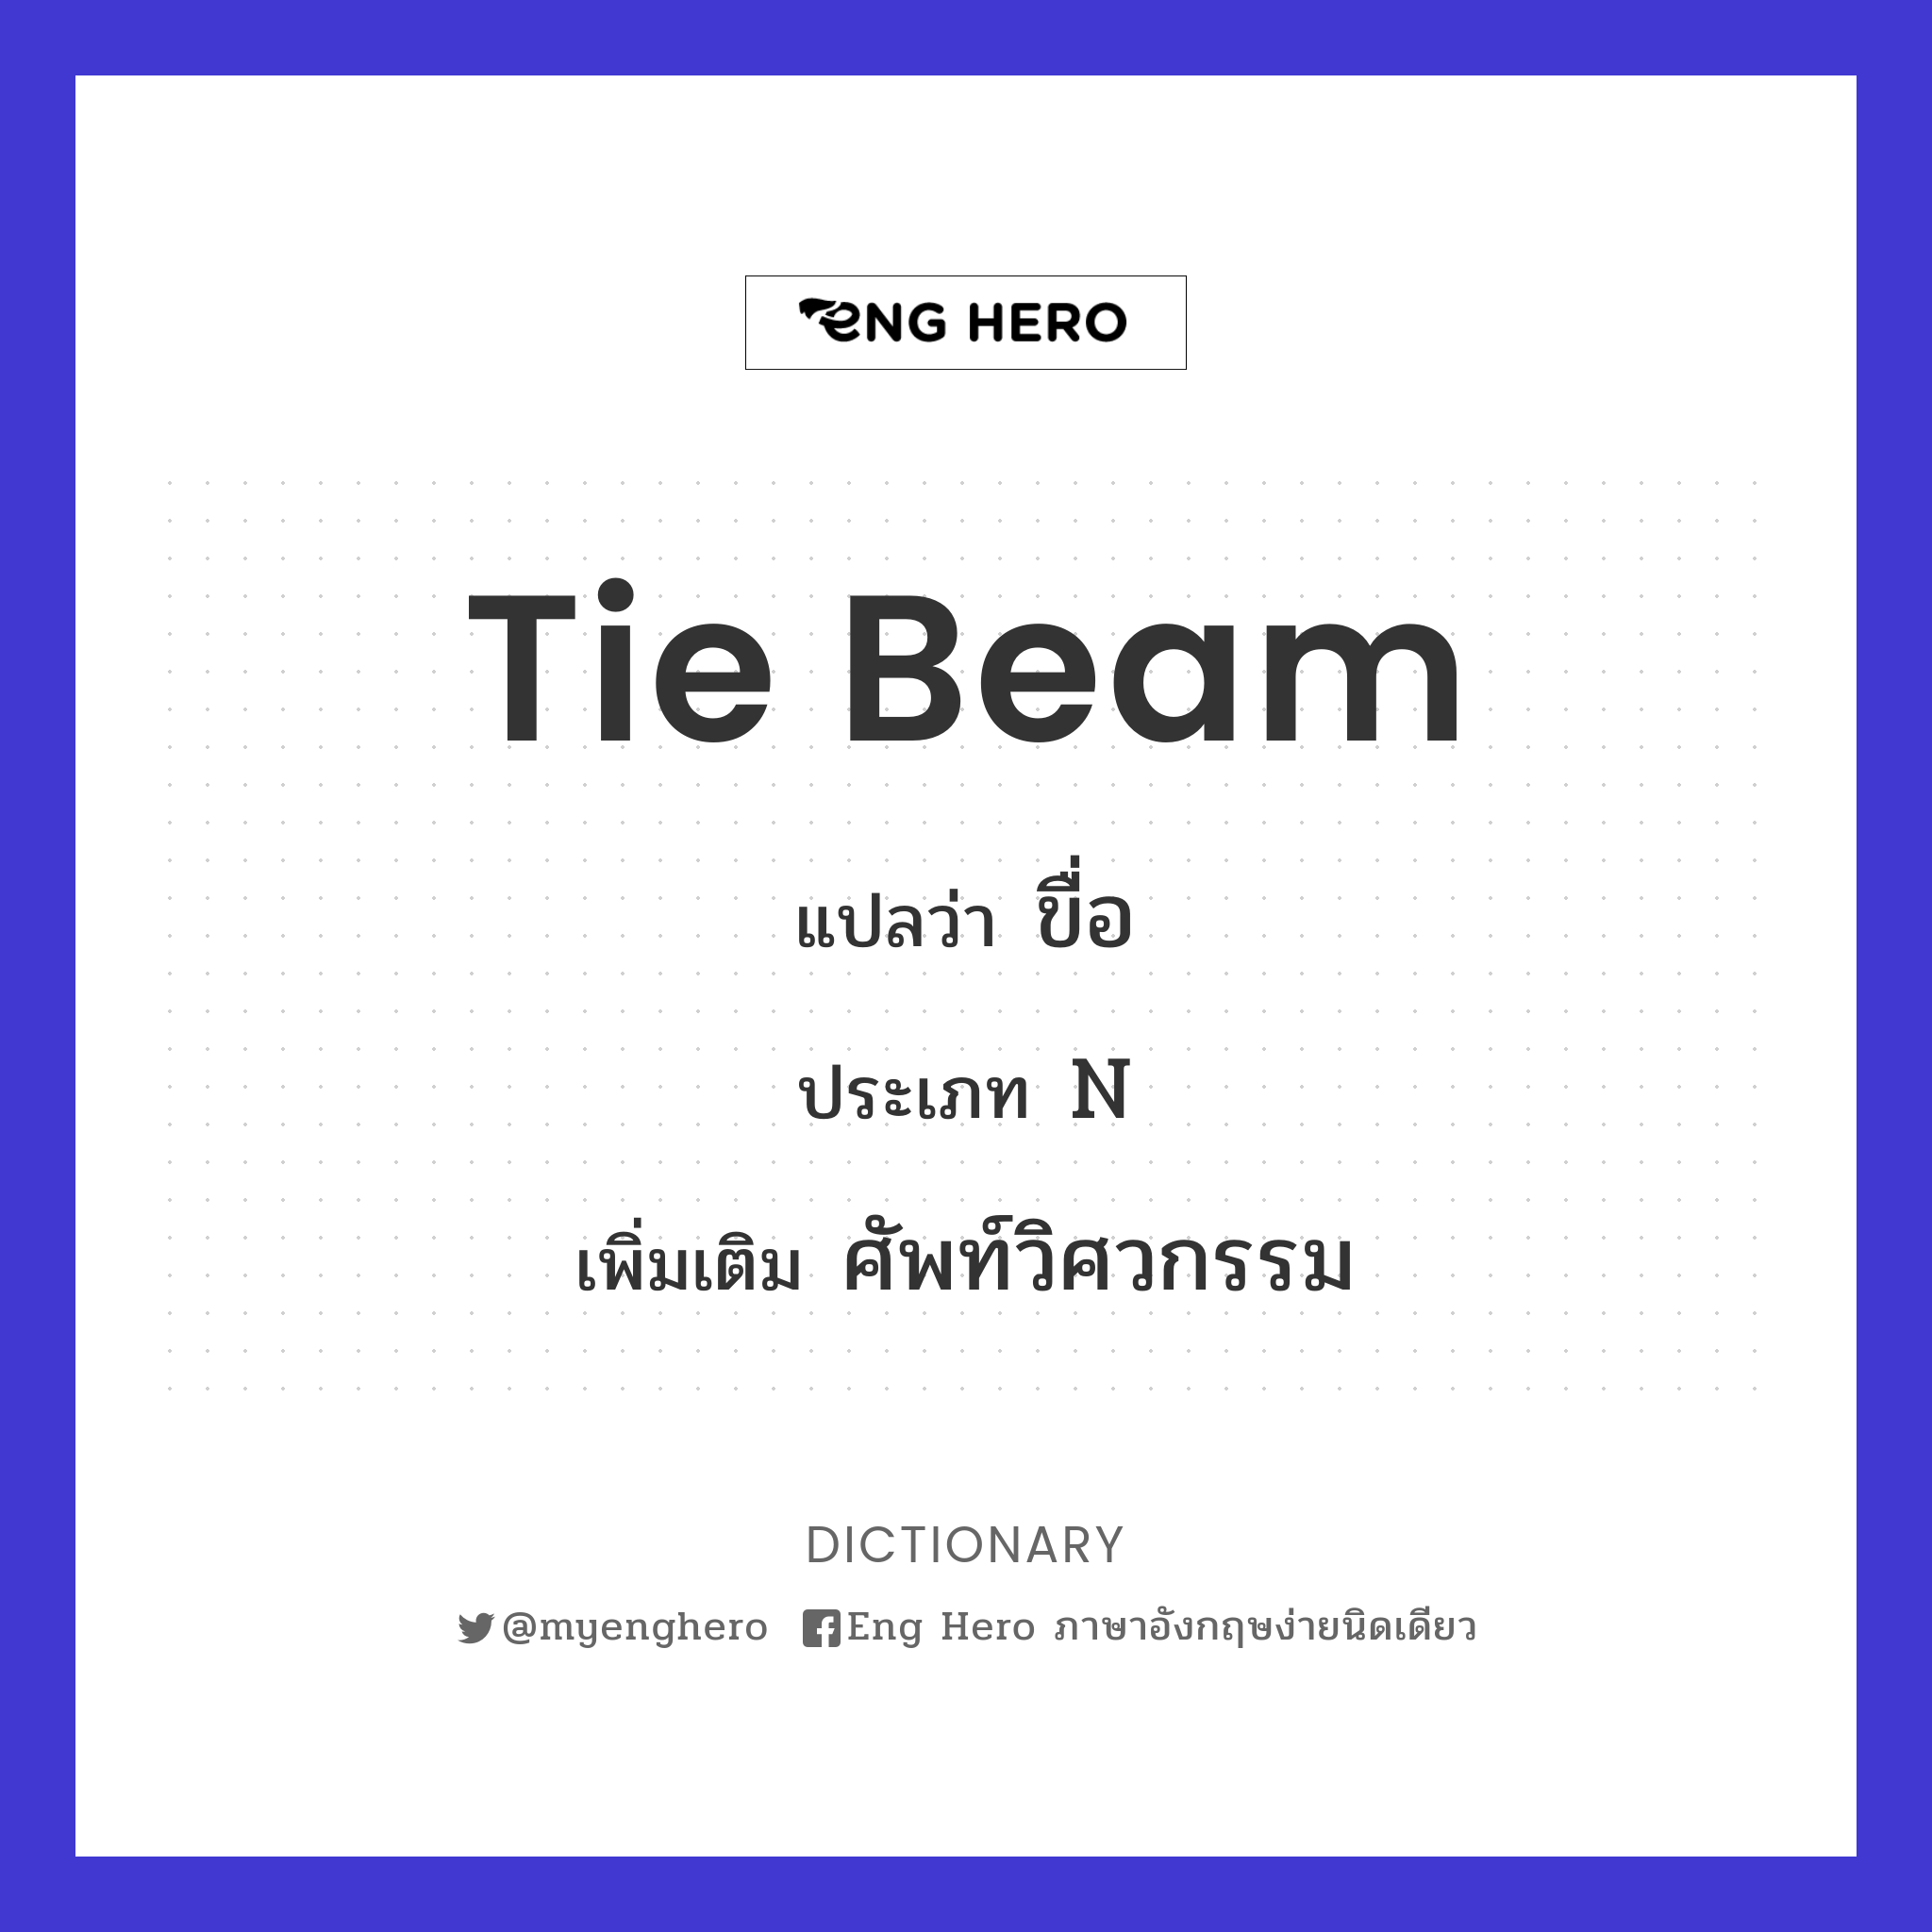 Tie beam